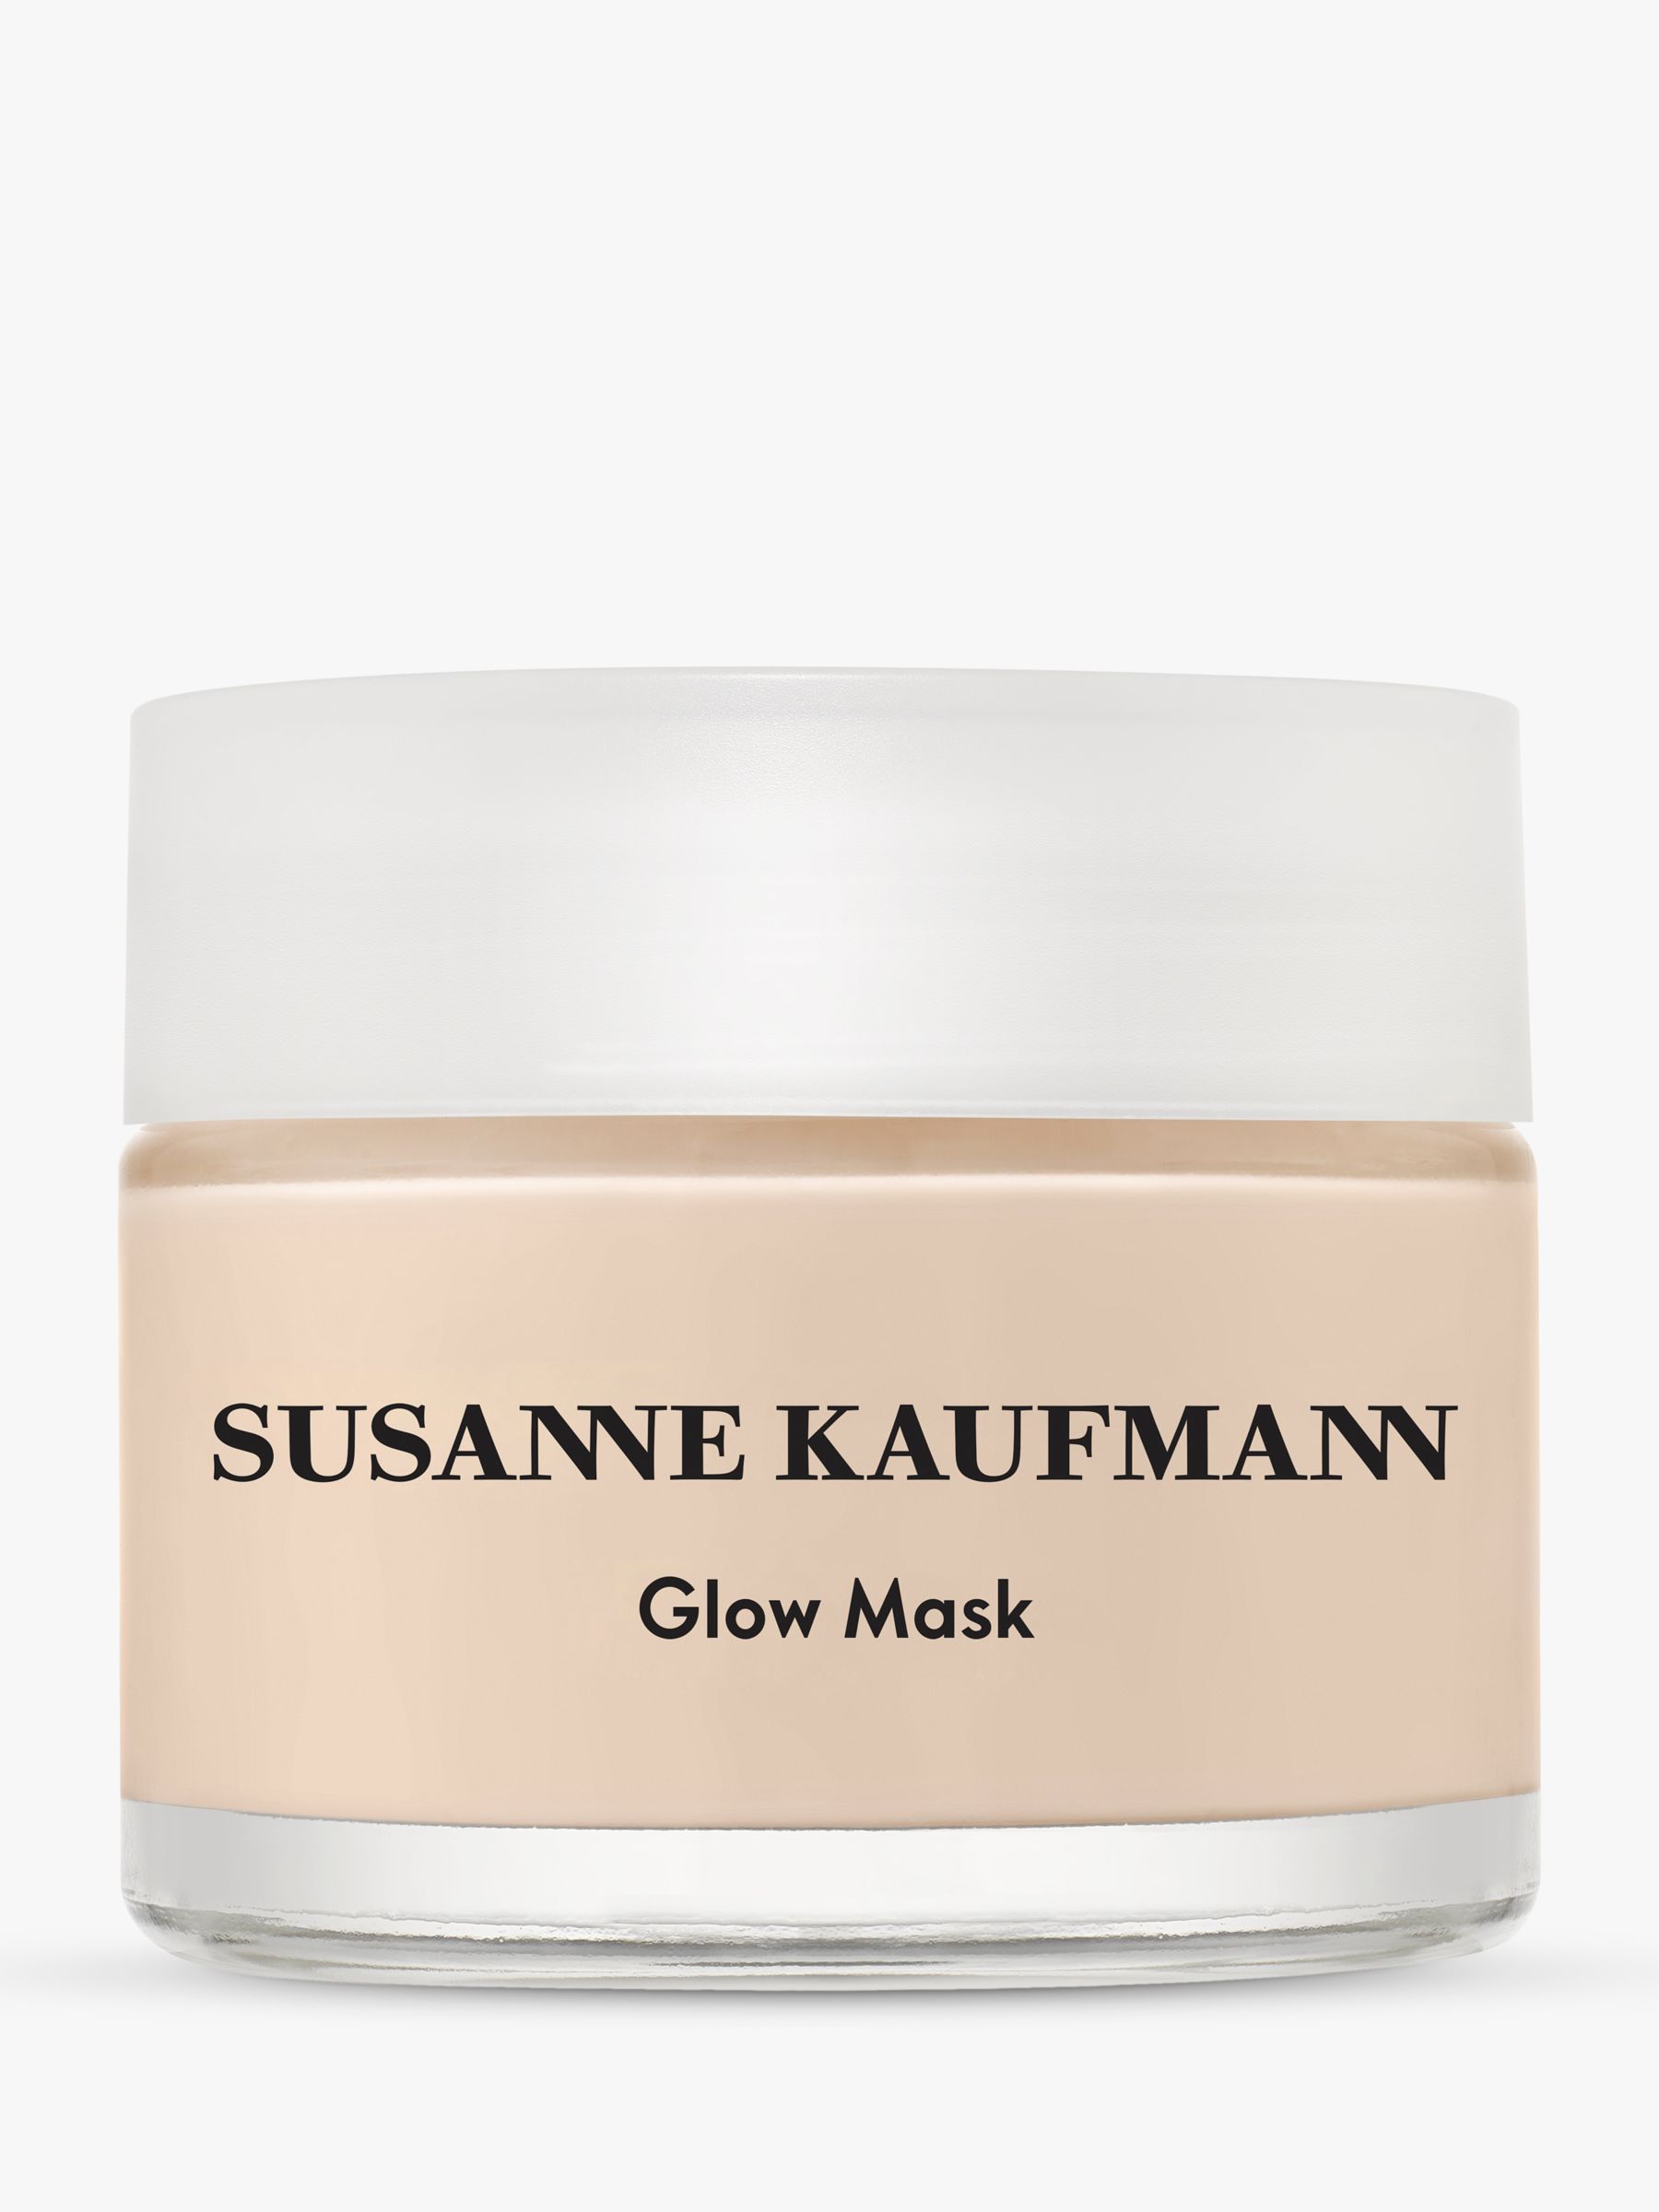 Susanne Kaufmann Glow Mask, 50ml 1